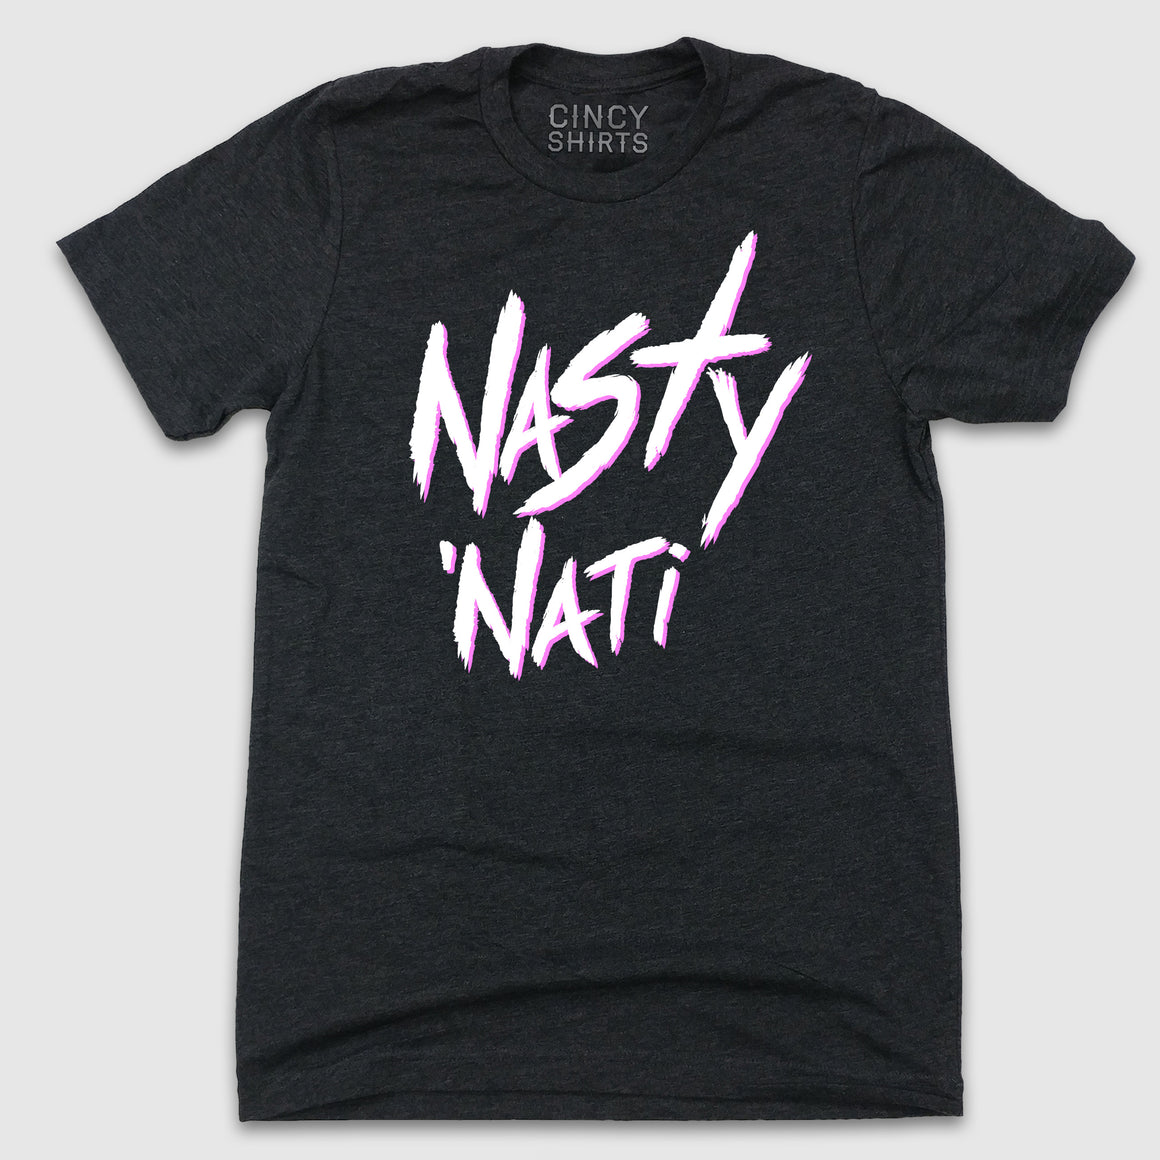 Nasty 'Nati - Cincy Shirts